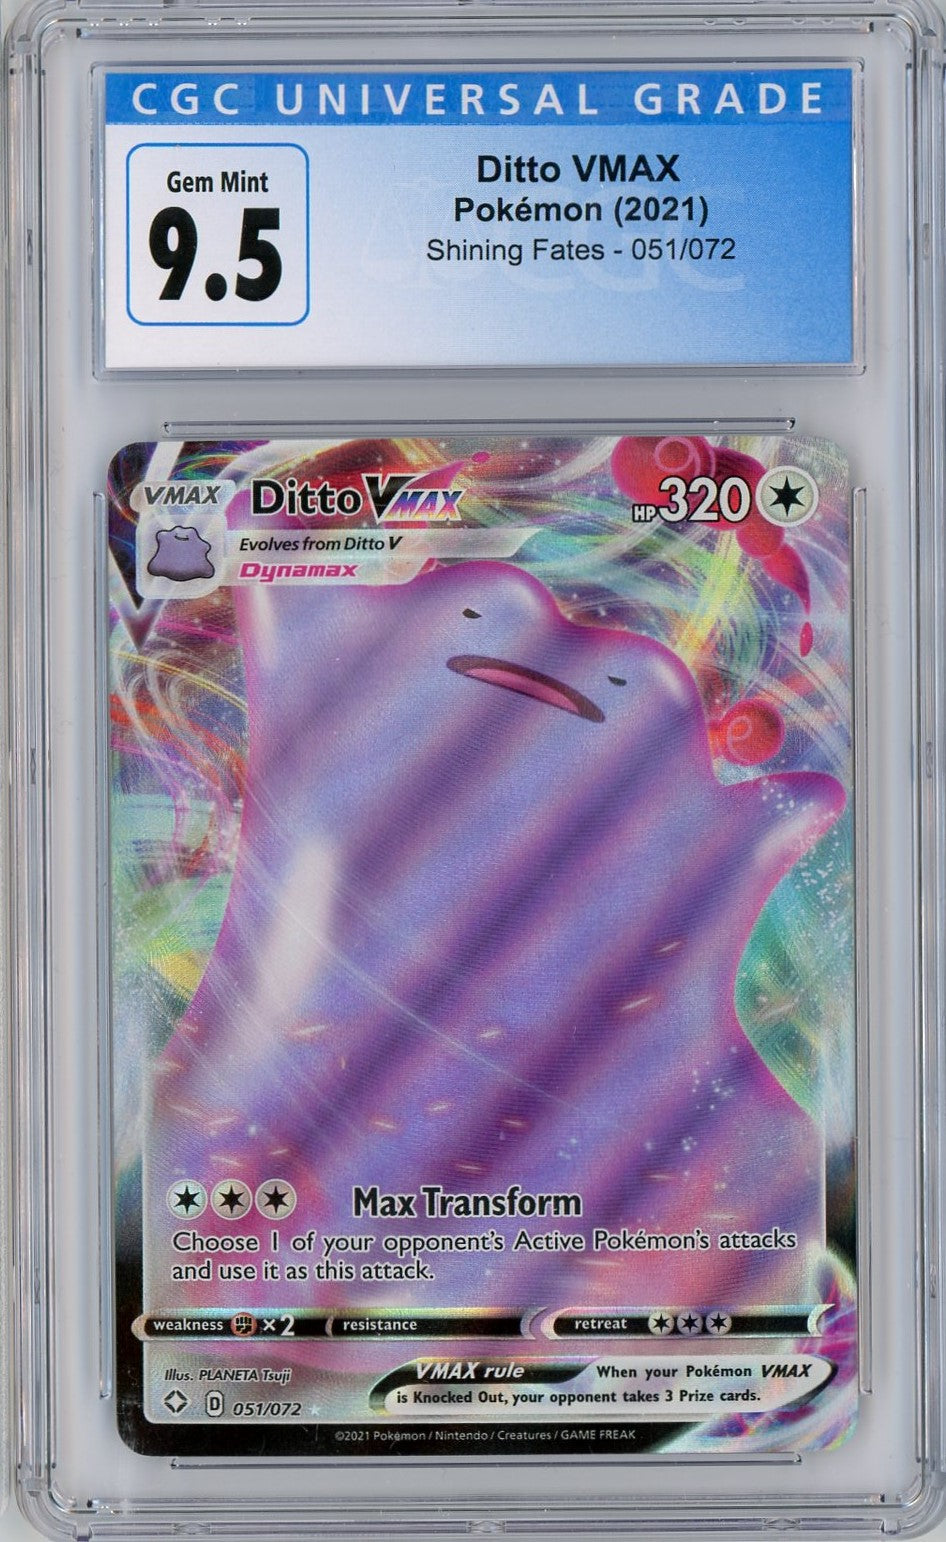 Check the actual price of your Ditto VMAX 051/072 Pokemon card